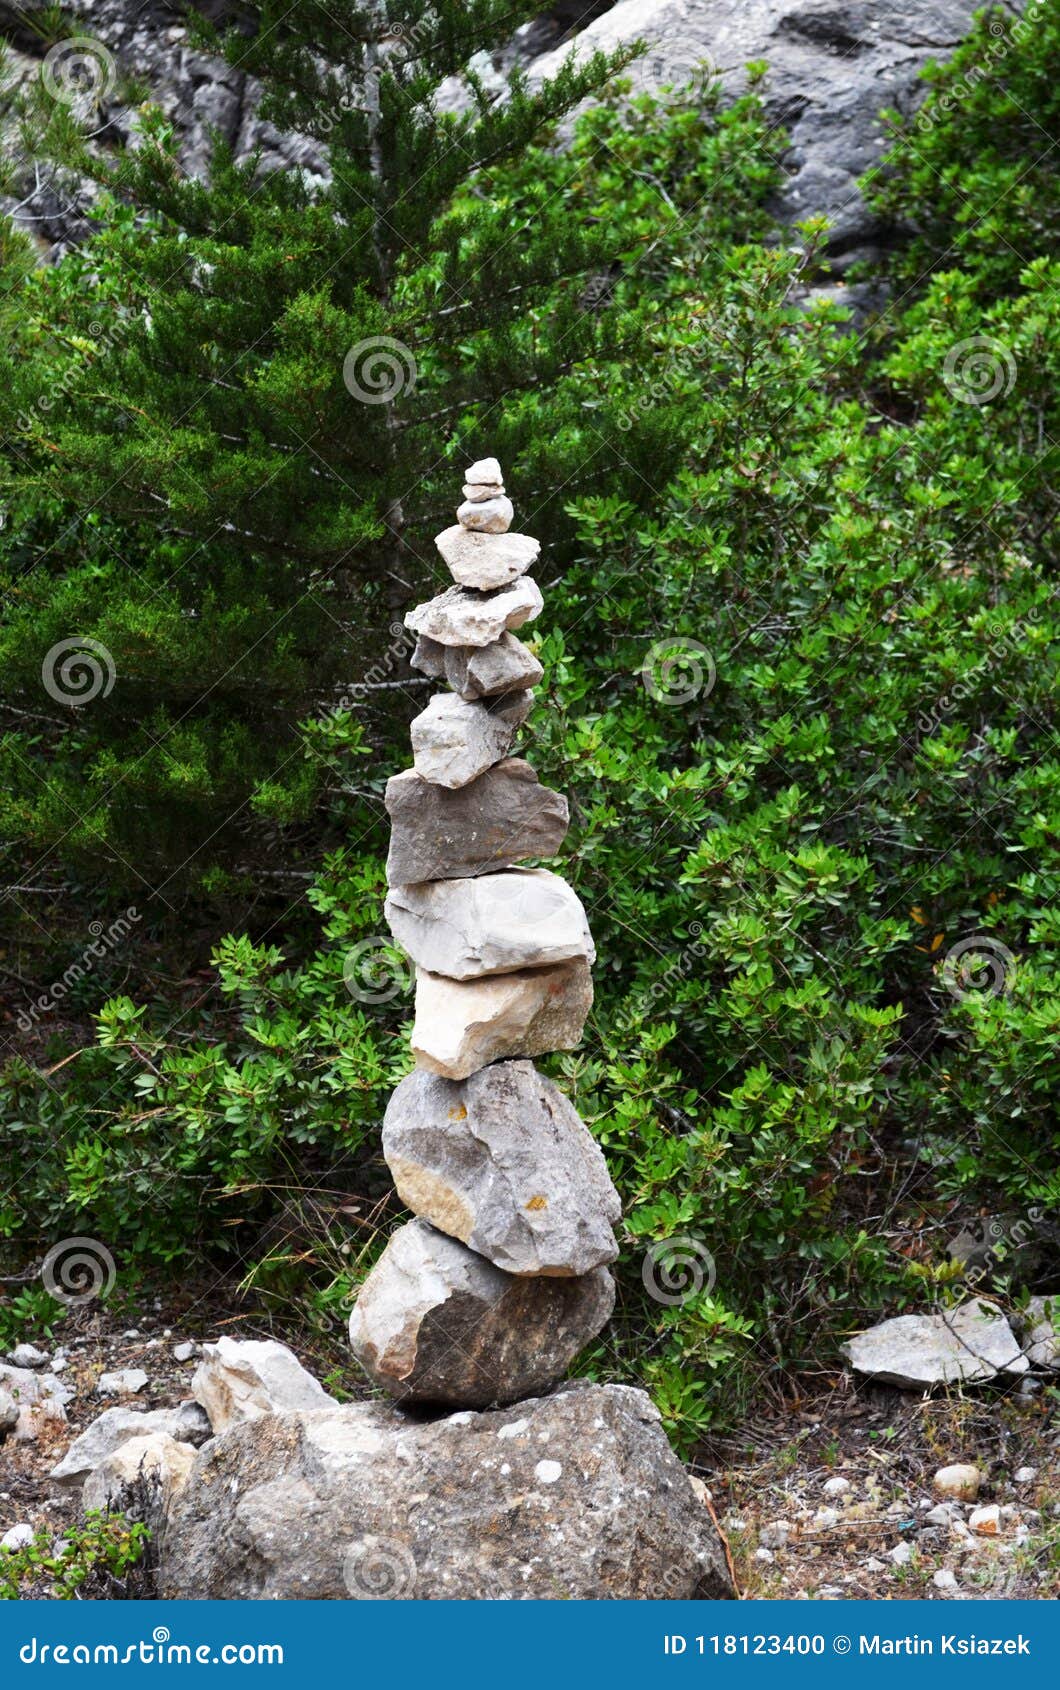 harmony of stones. he calms a man.